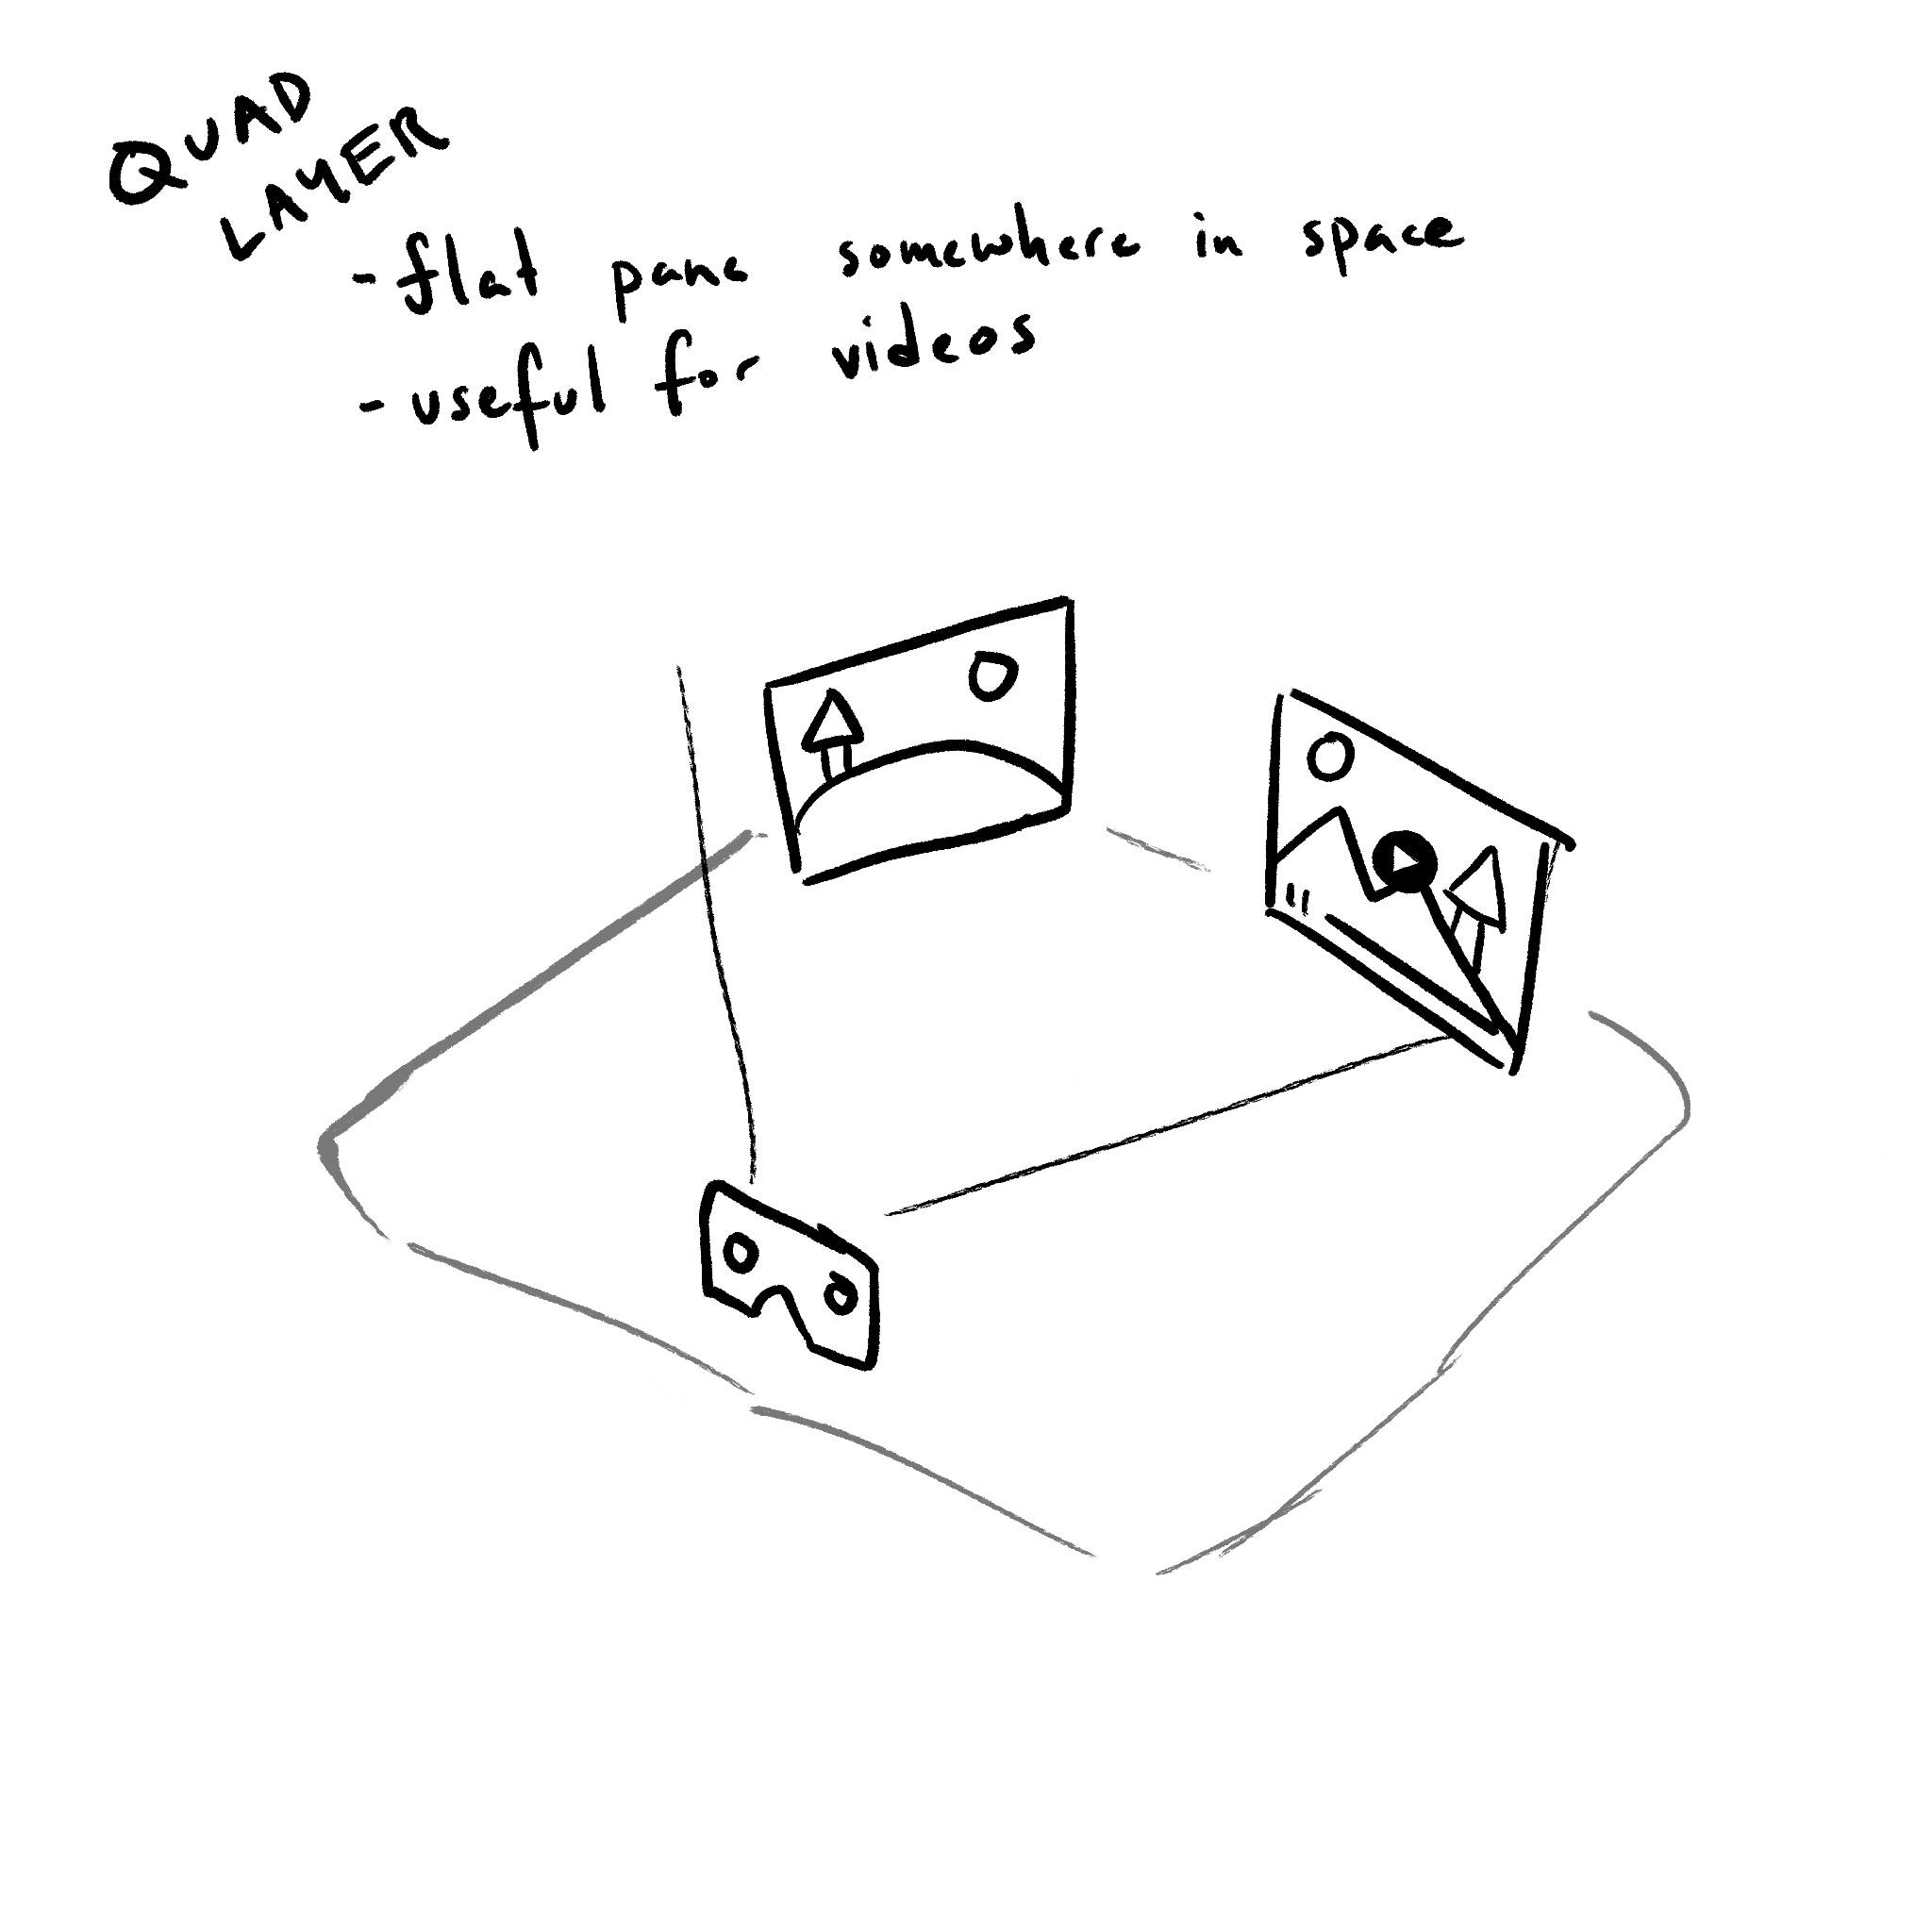 representation of a quad layer